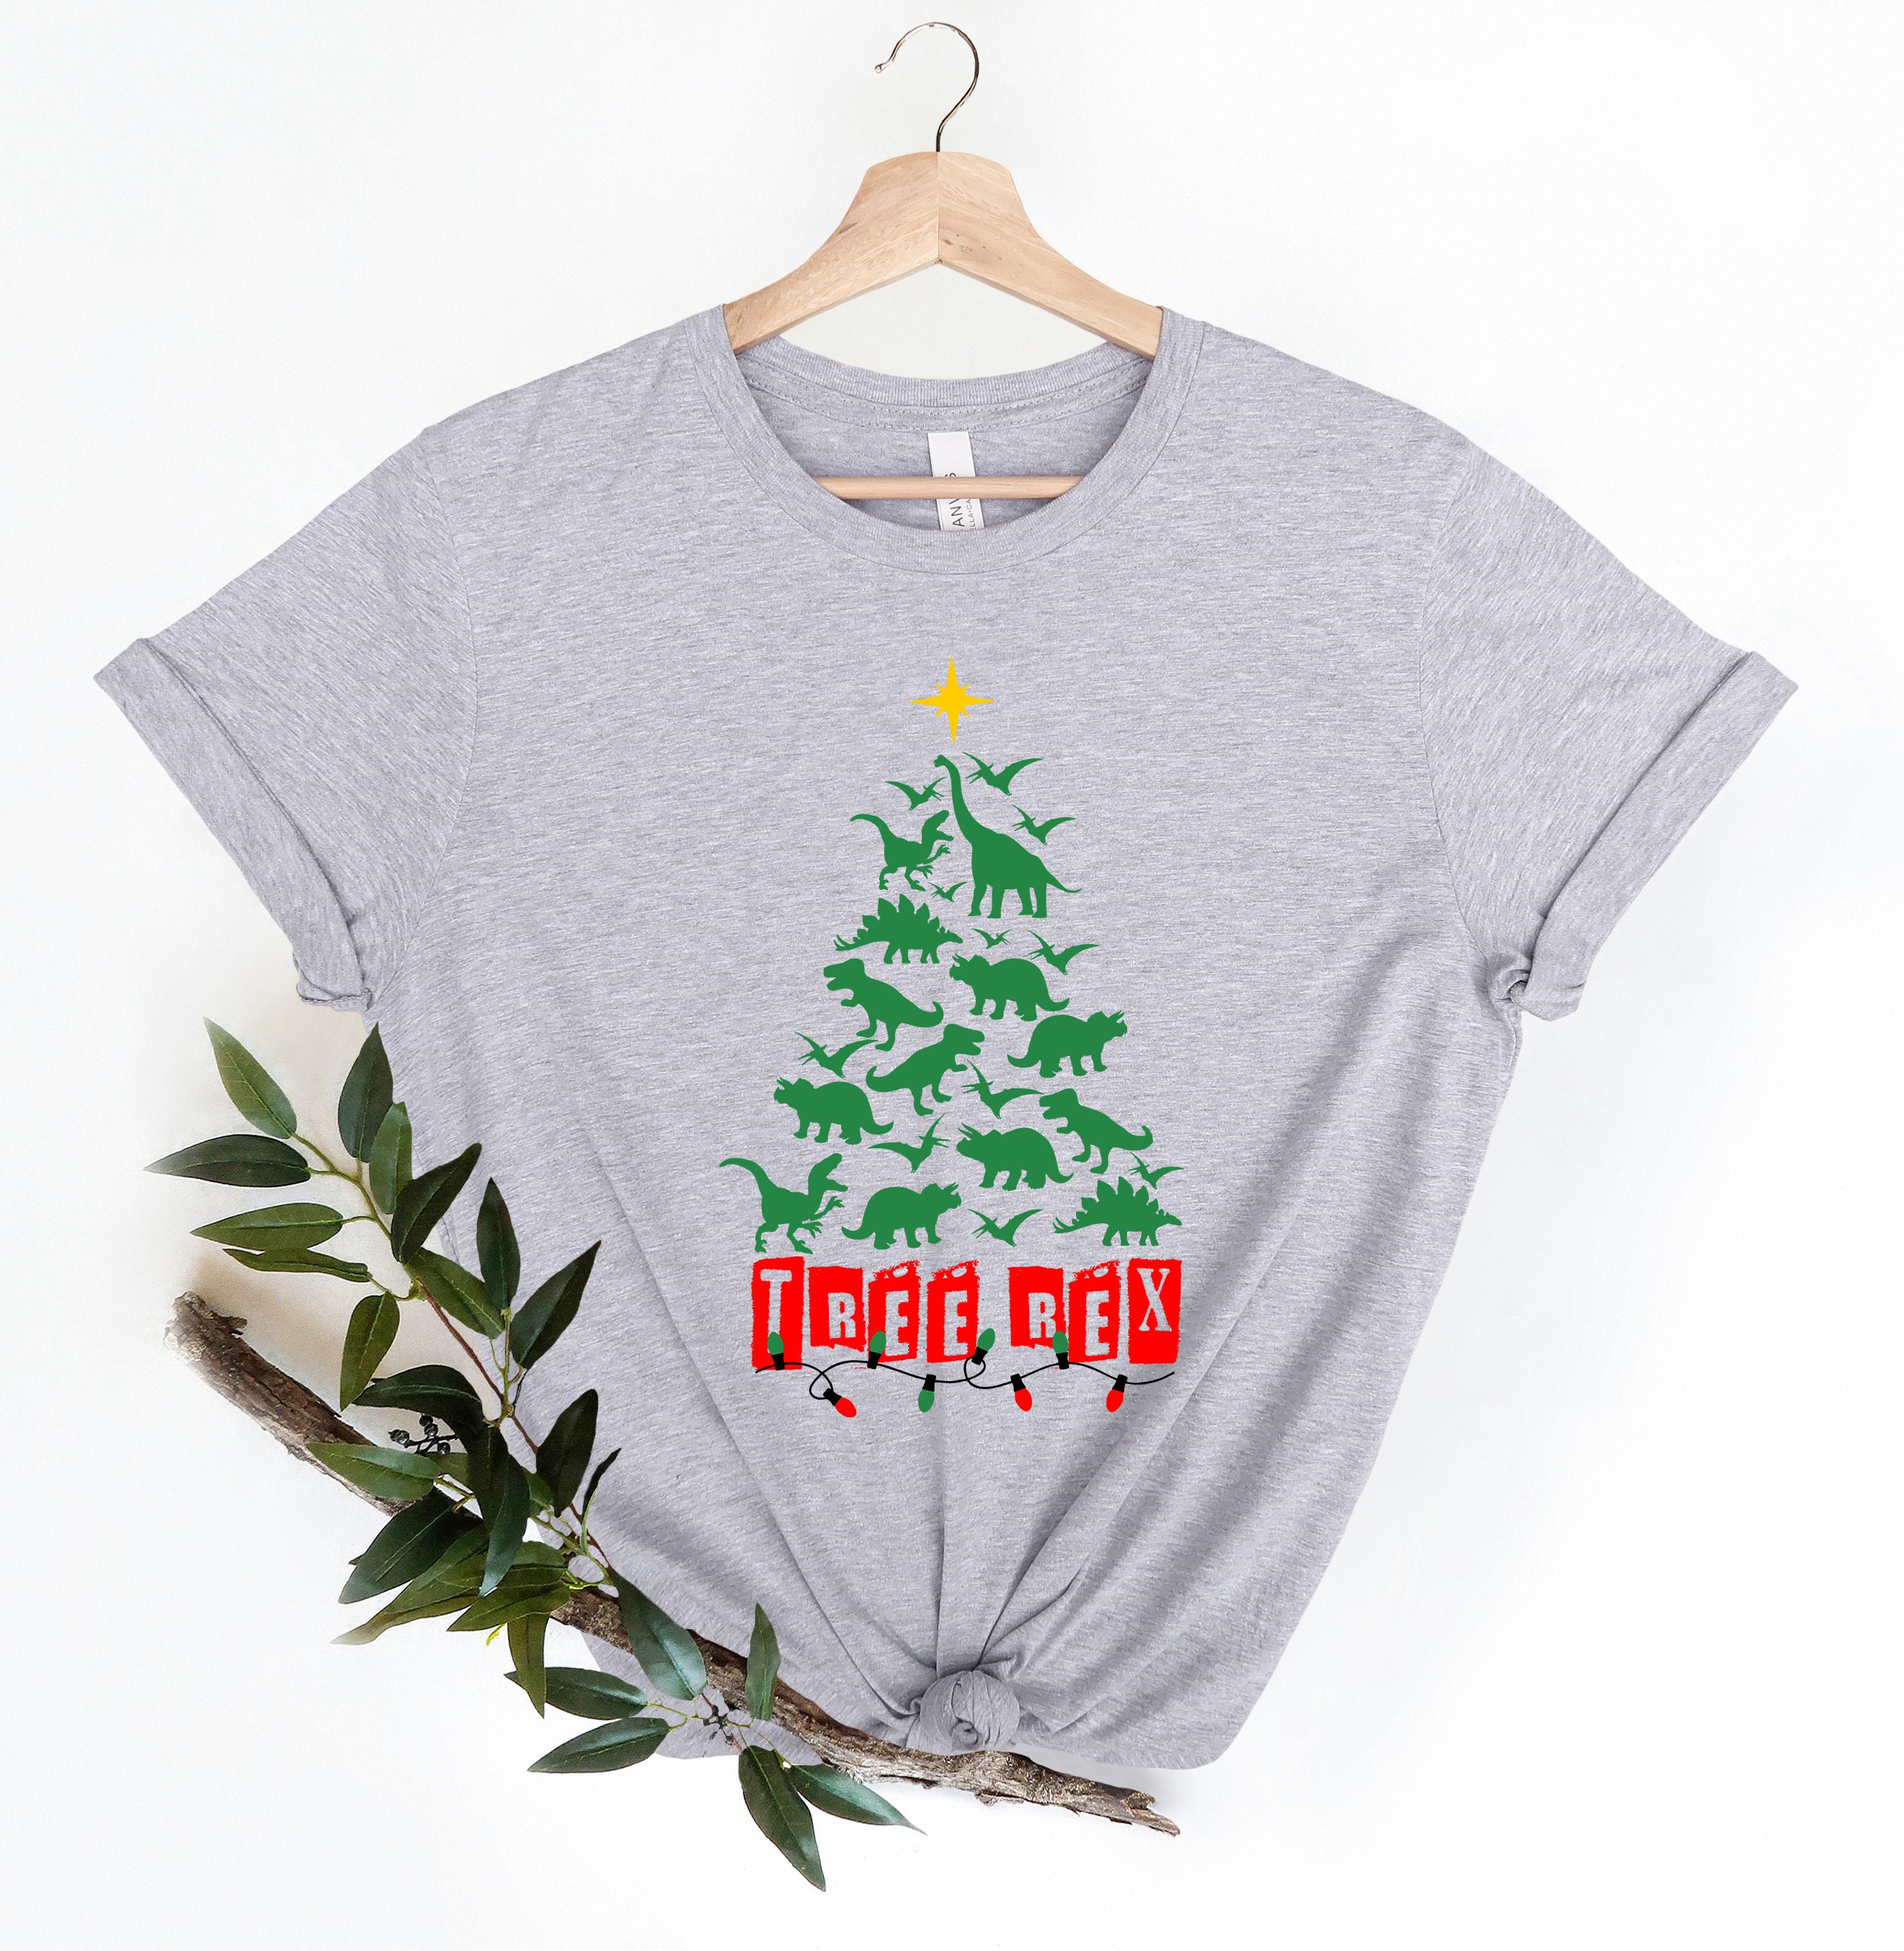 Discover Tree Rex Shirt, Christmas Dinosaur Shirt, Dinosaur Santa, Jurassic Christmas, Dinosaur at Xmas,Cute Dino Outfit, Xmas Tree Shirt,